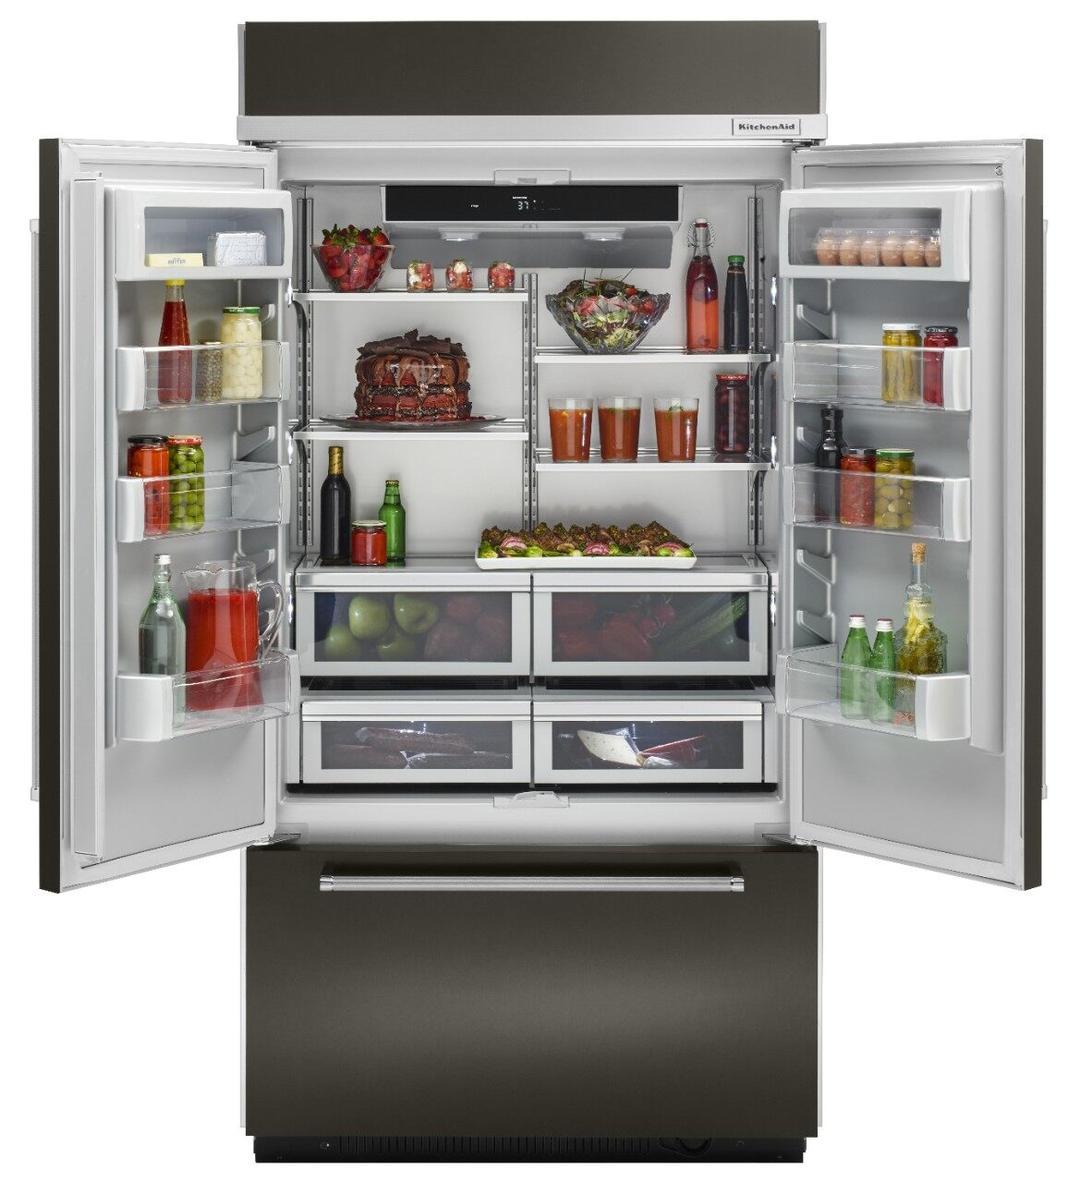 KitchenAid - 42.25 Inch 24 cu. ft French Door Refrigerator in Black Stainless - KBFN502EBS